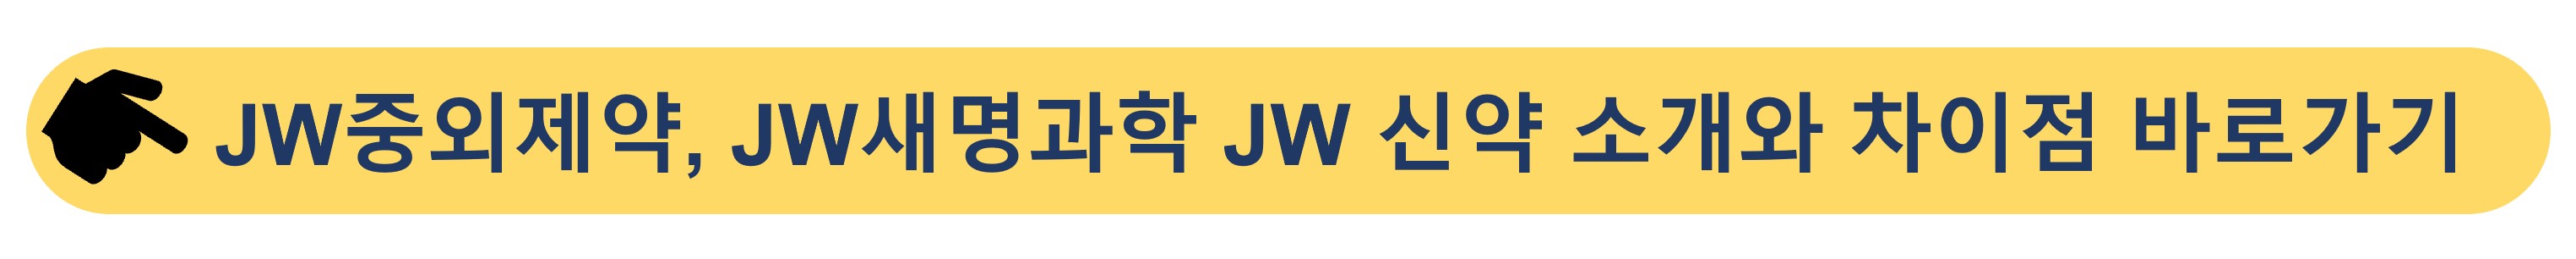 JW중외제약-JW중외신약